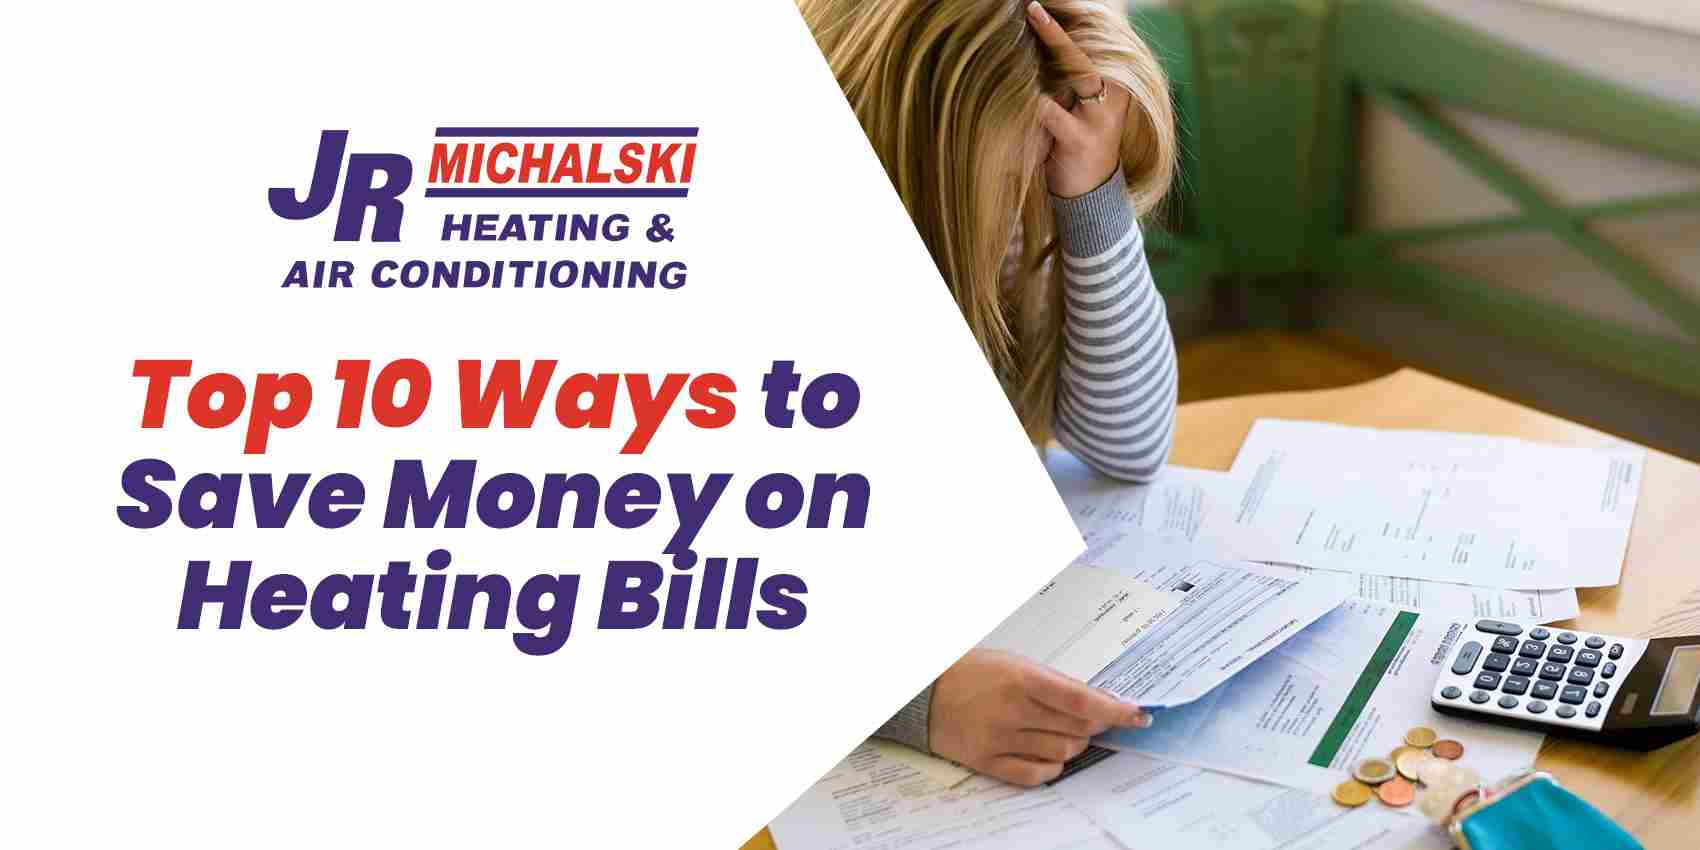 Top 10 Ways to Save Money on Heating Bills